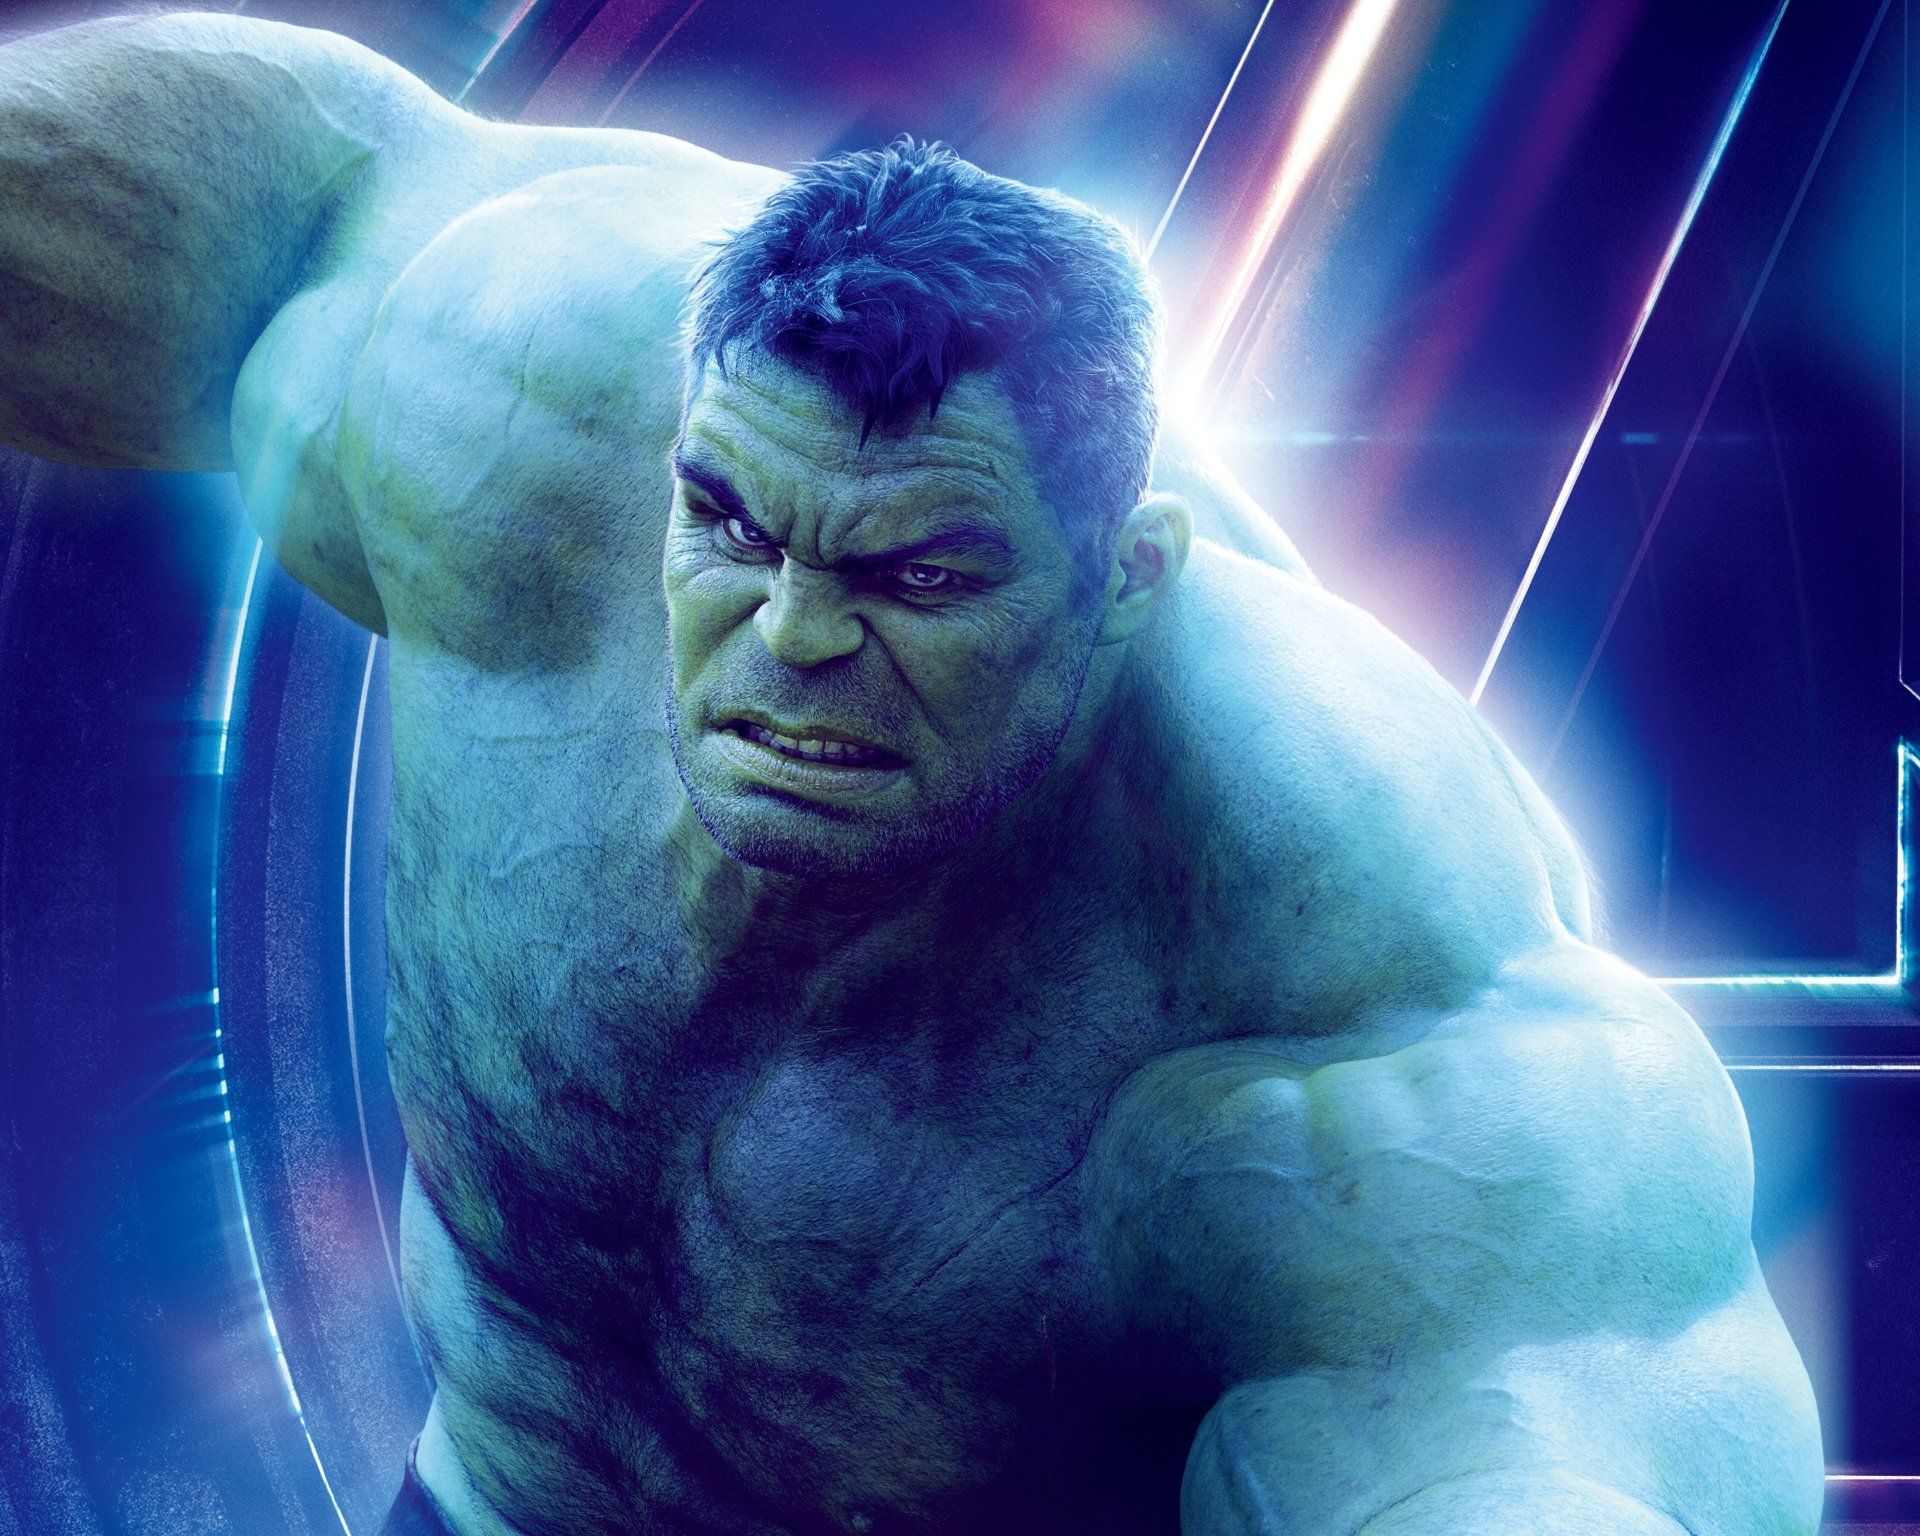 Hulk Avengers Infinity War 8k Ultra HD Wallpaper And Background